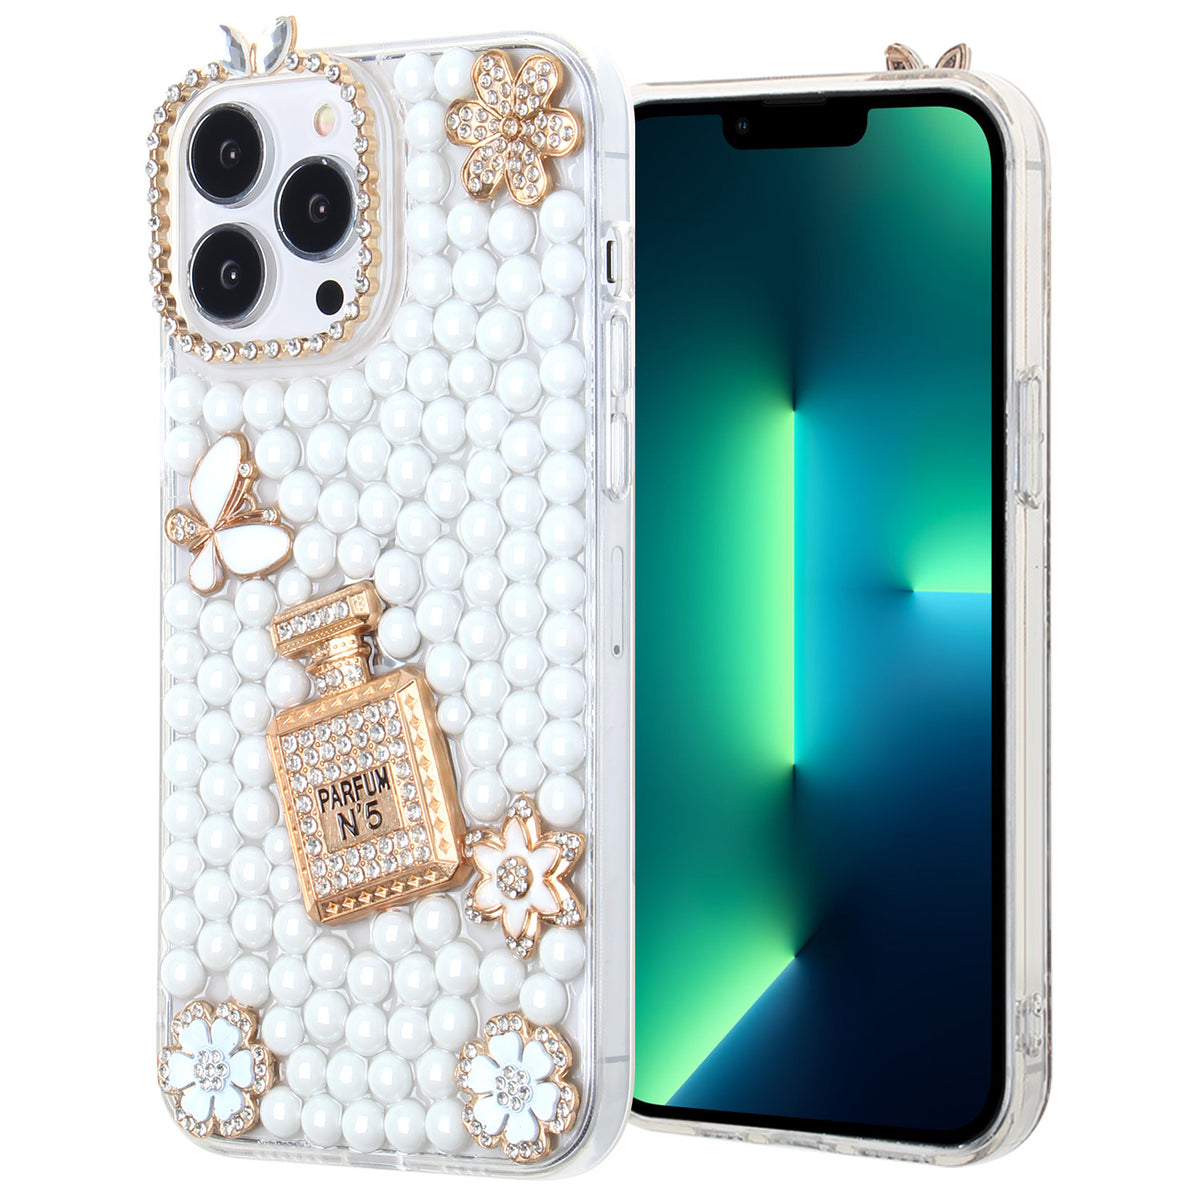 Iphone 7 / 8 / SE White Pearl Diamond Case with Perfume